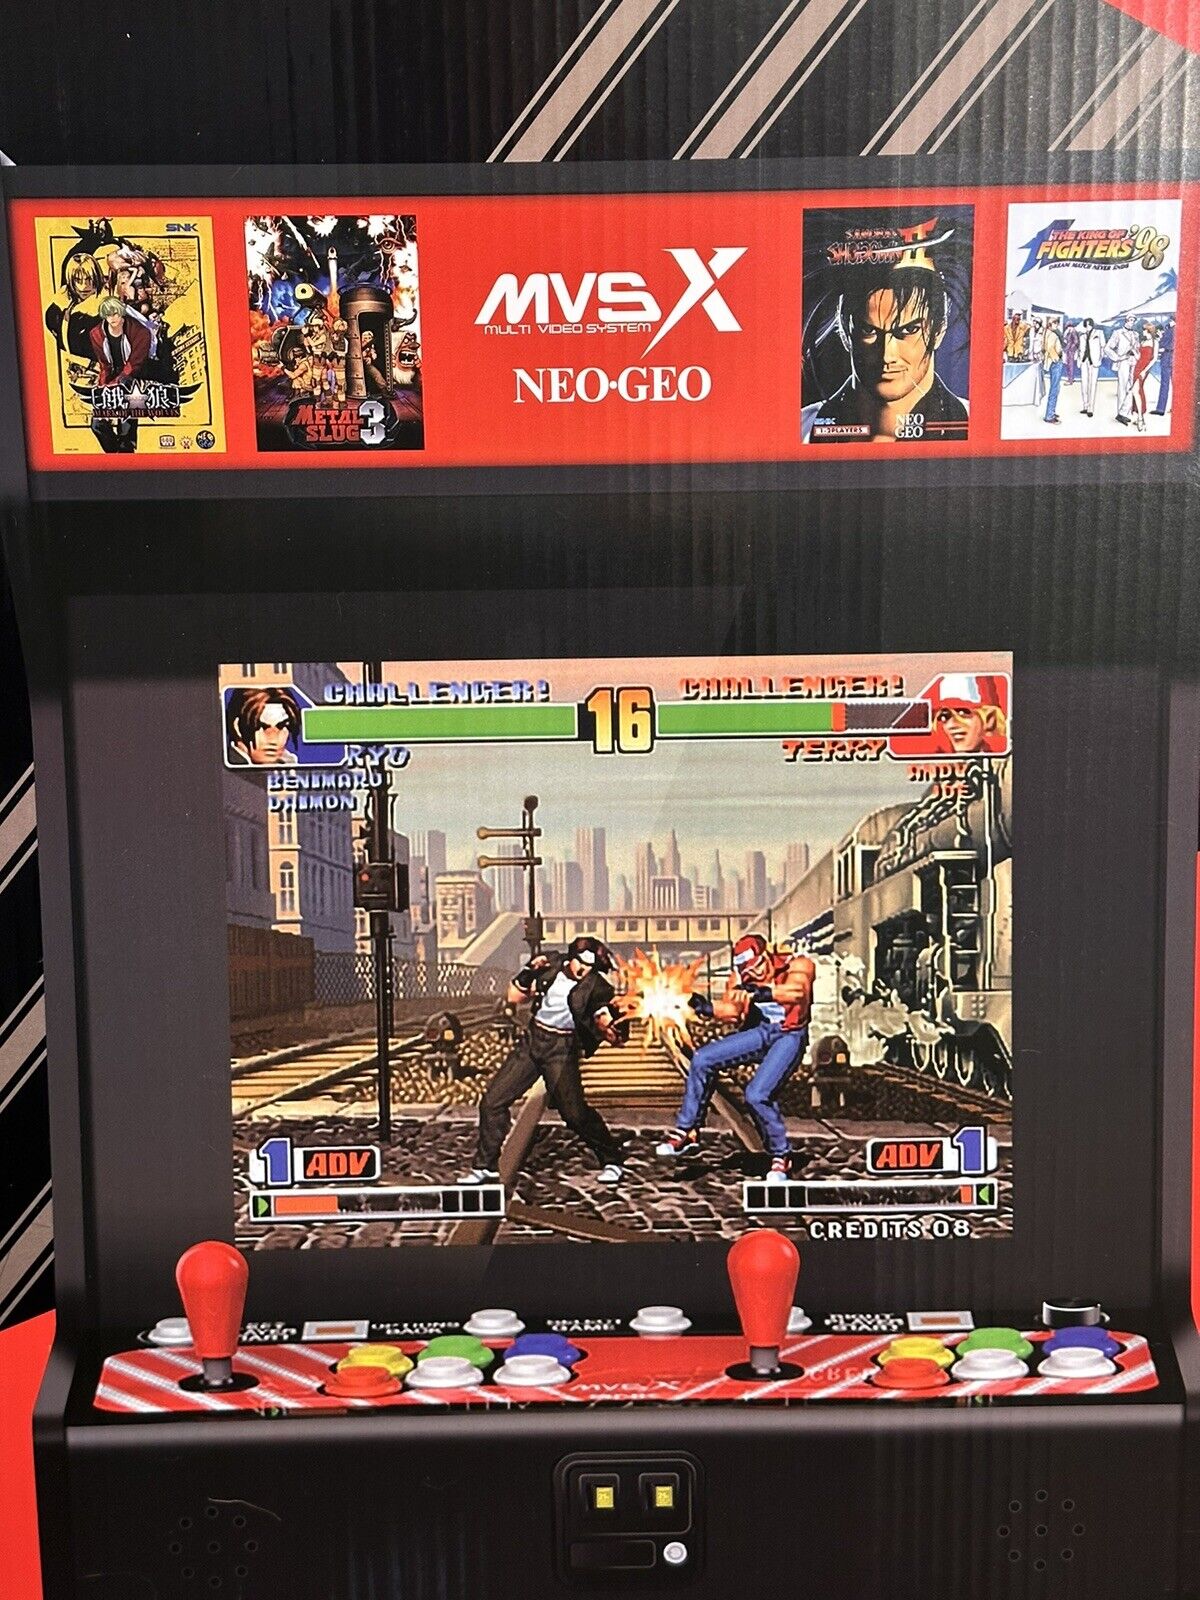 SNK Neogeo MVSX Home Arcade Video Game Machine Set Base 50 SNK Classical Games